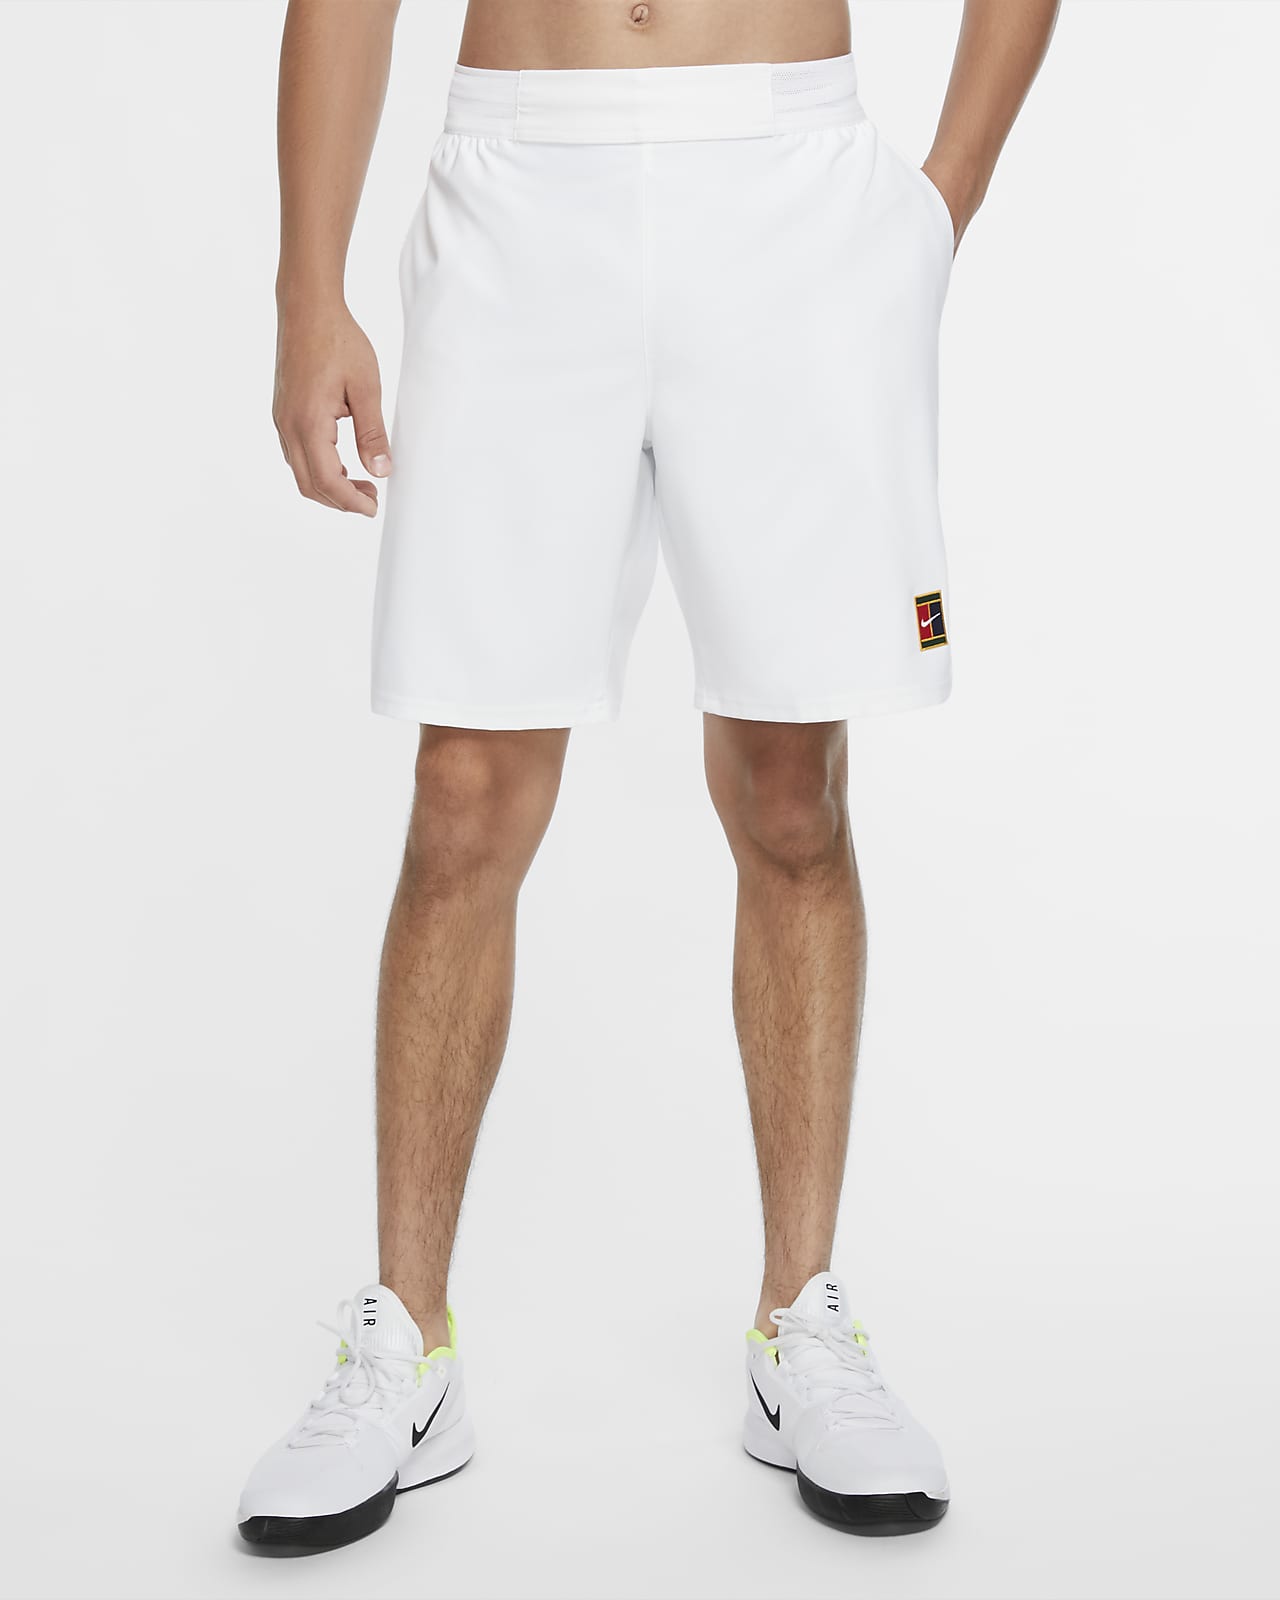 nike court flex ace tennis shorts